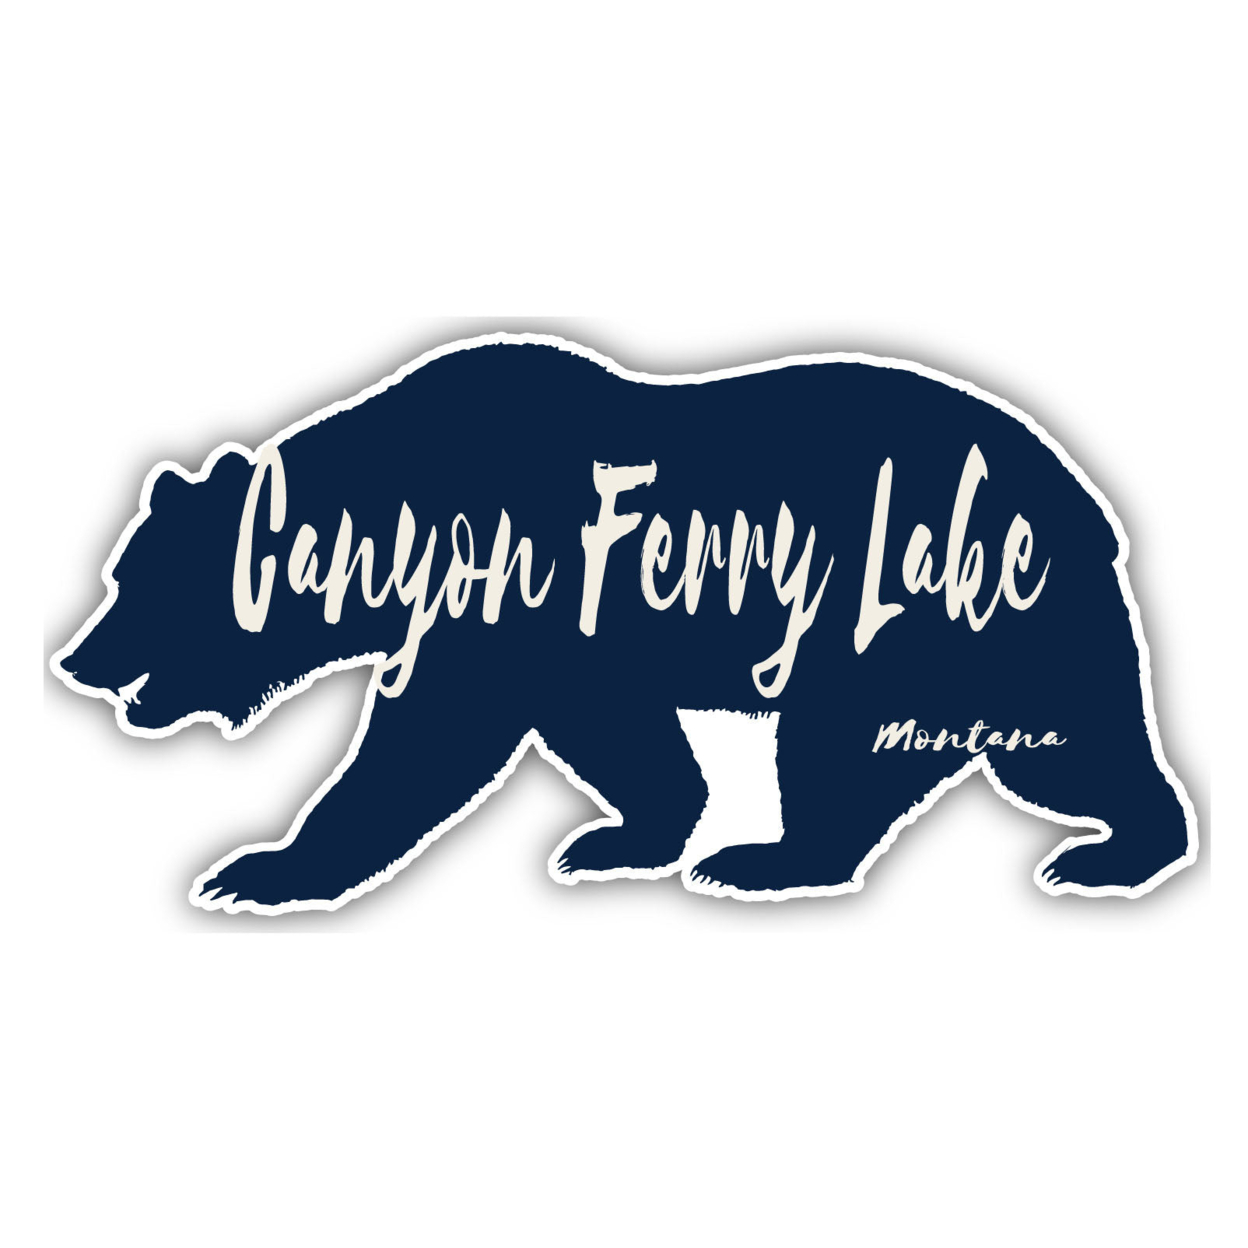 Canyon Ferry Lake Montana Souvenir Decorative Stickers (Choose Theme And Size) - Single Unit, 8-Inch, Bear